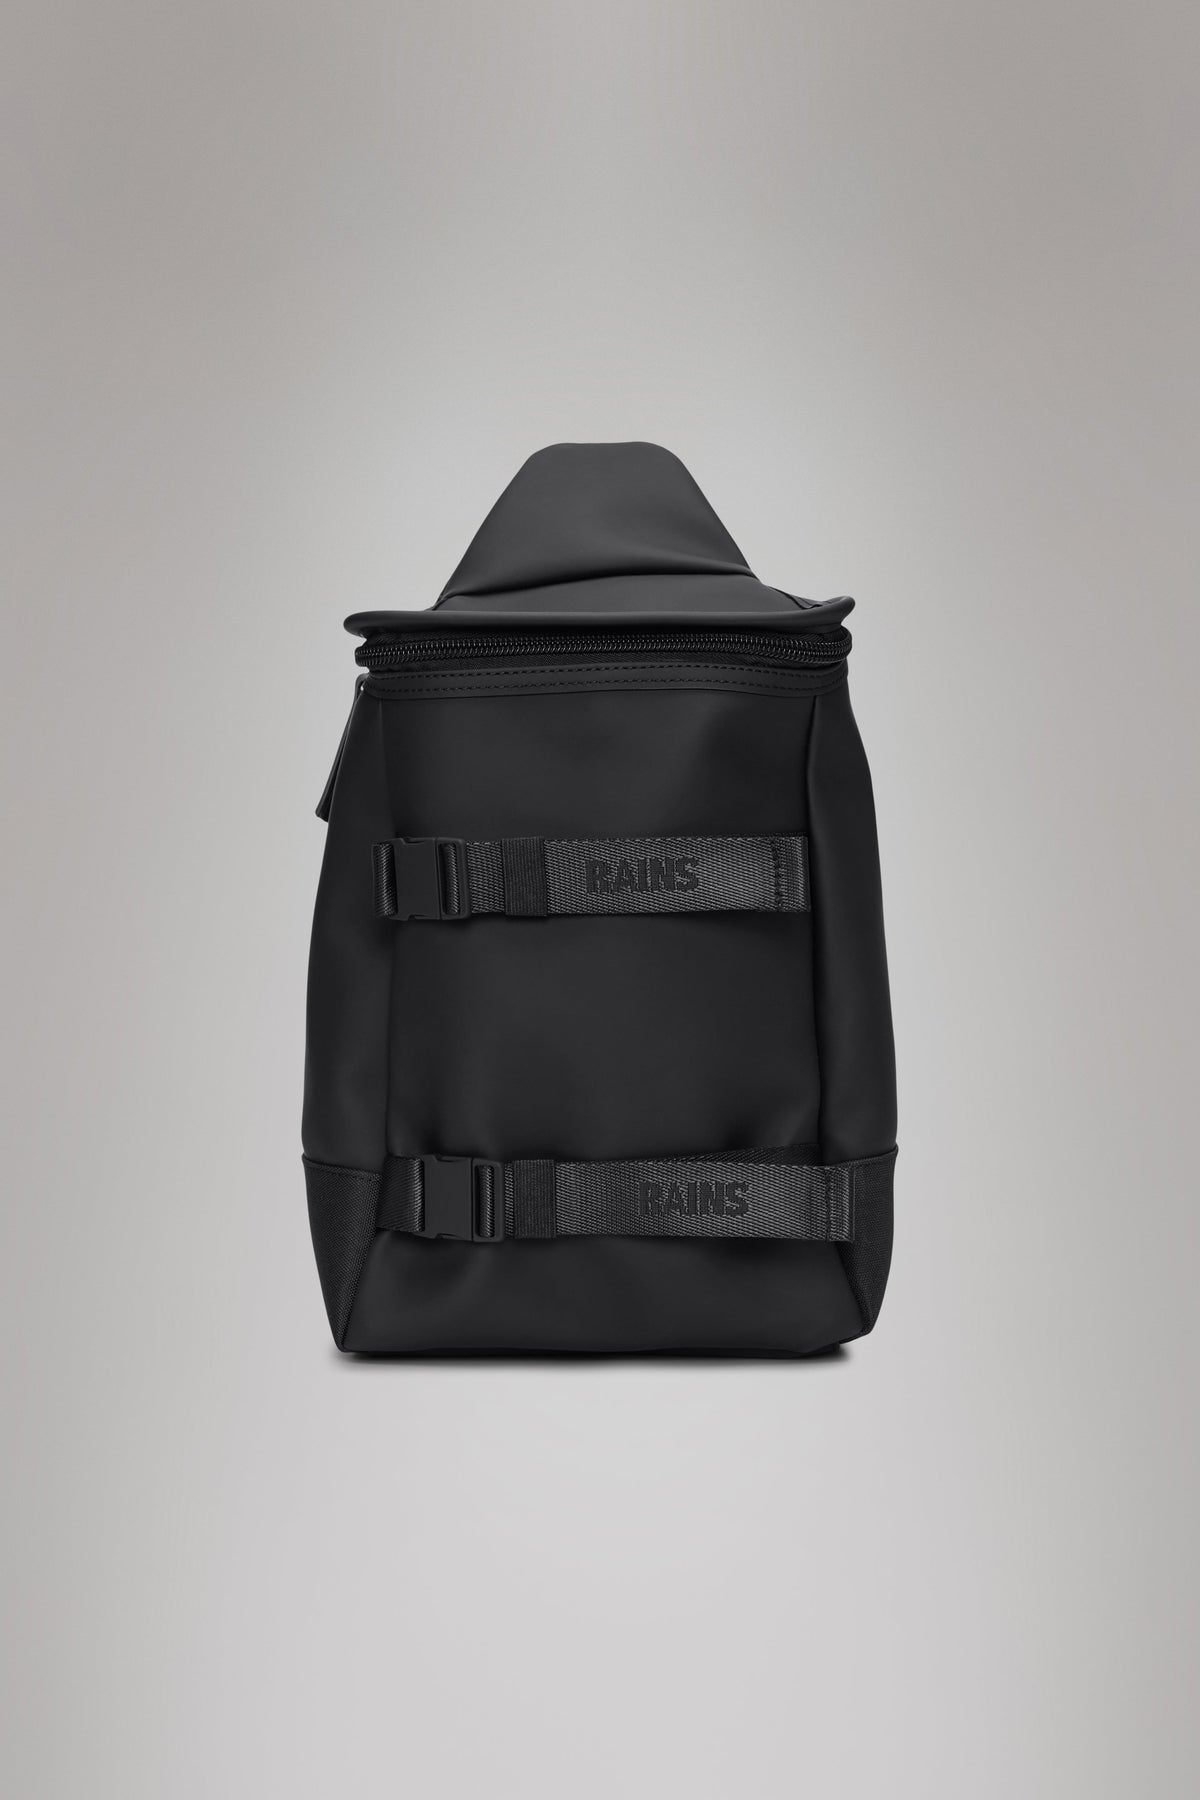 Trail Sling Bag in Black